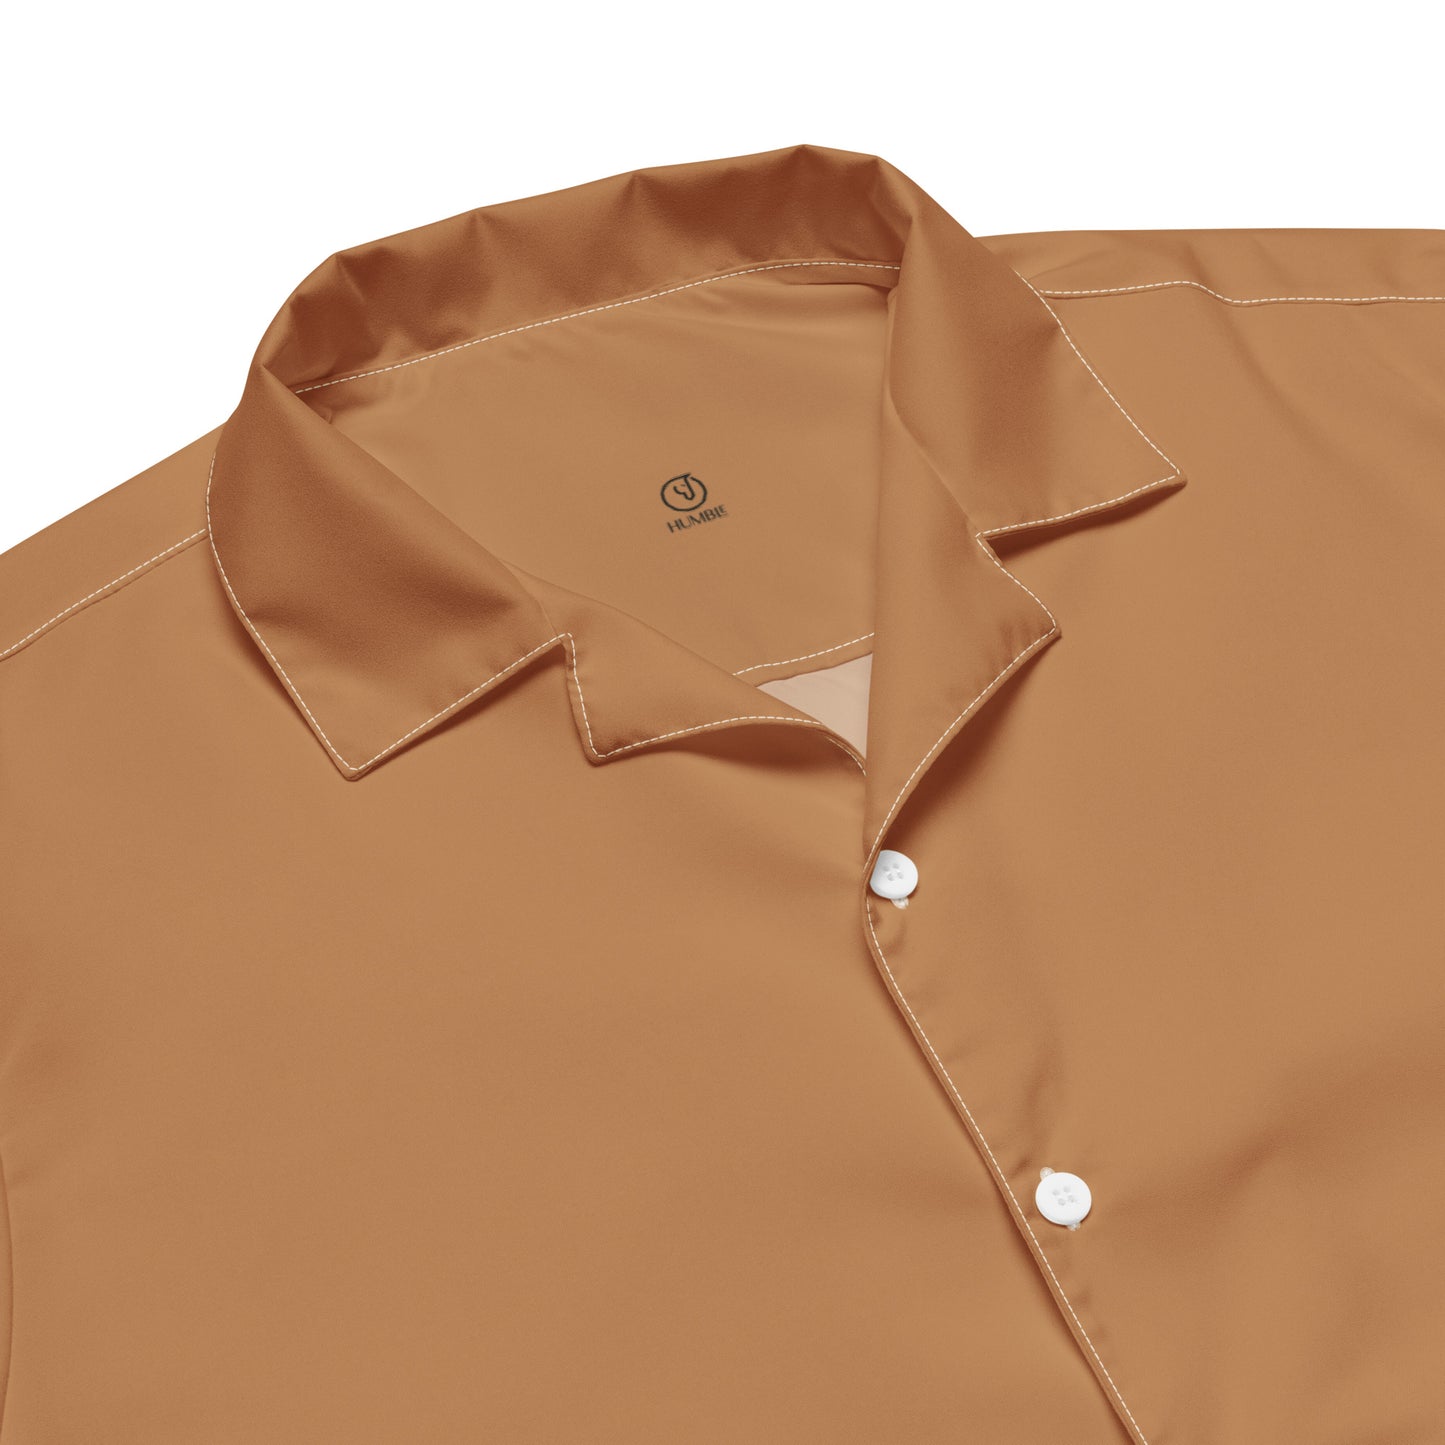 Humble Sportswear, men's casual Color Match neutral brown lightweight button shirt